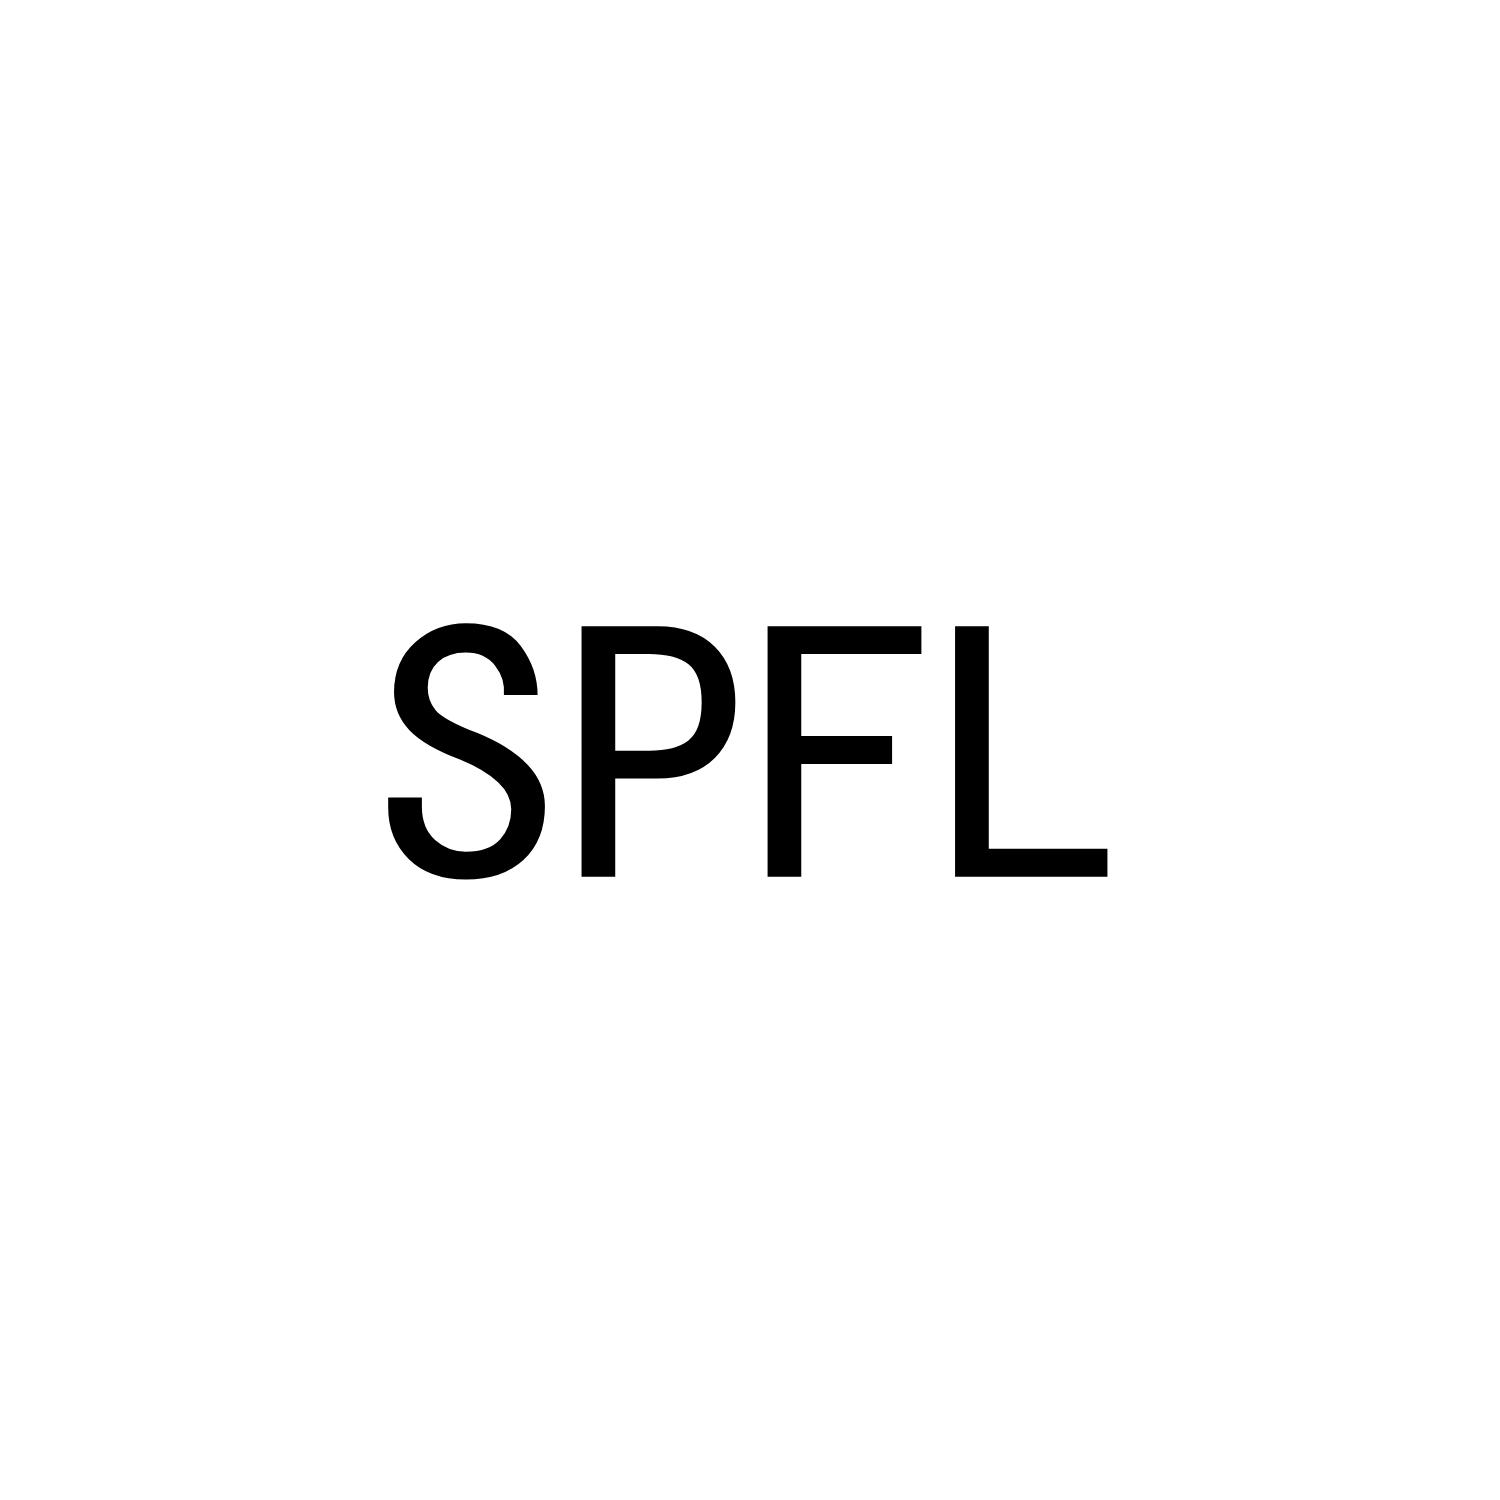 SPFL